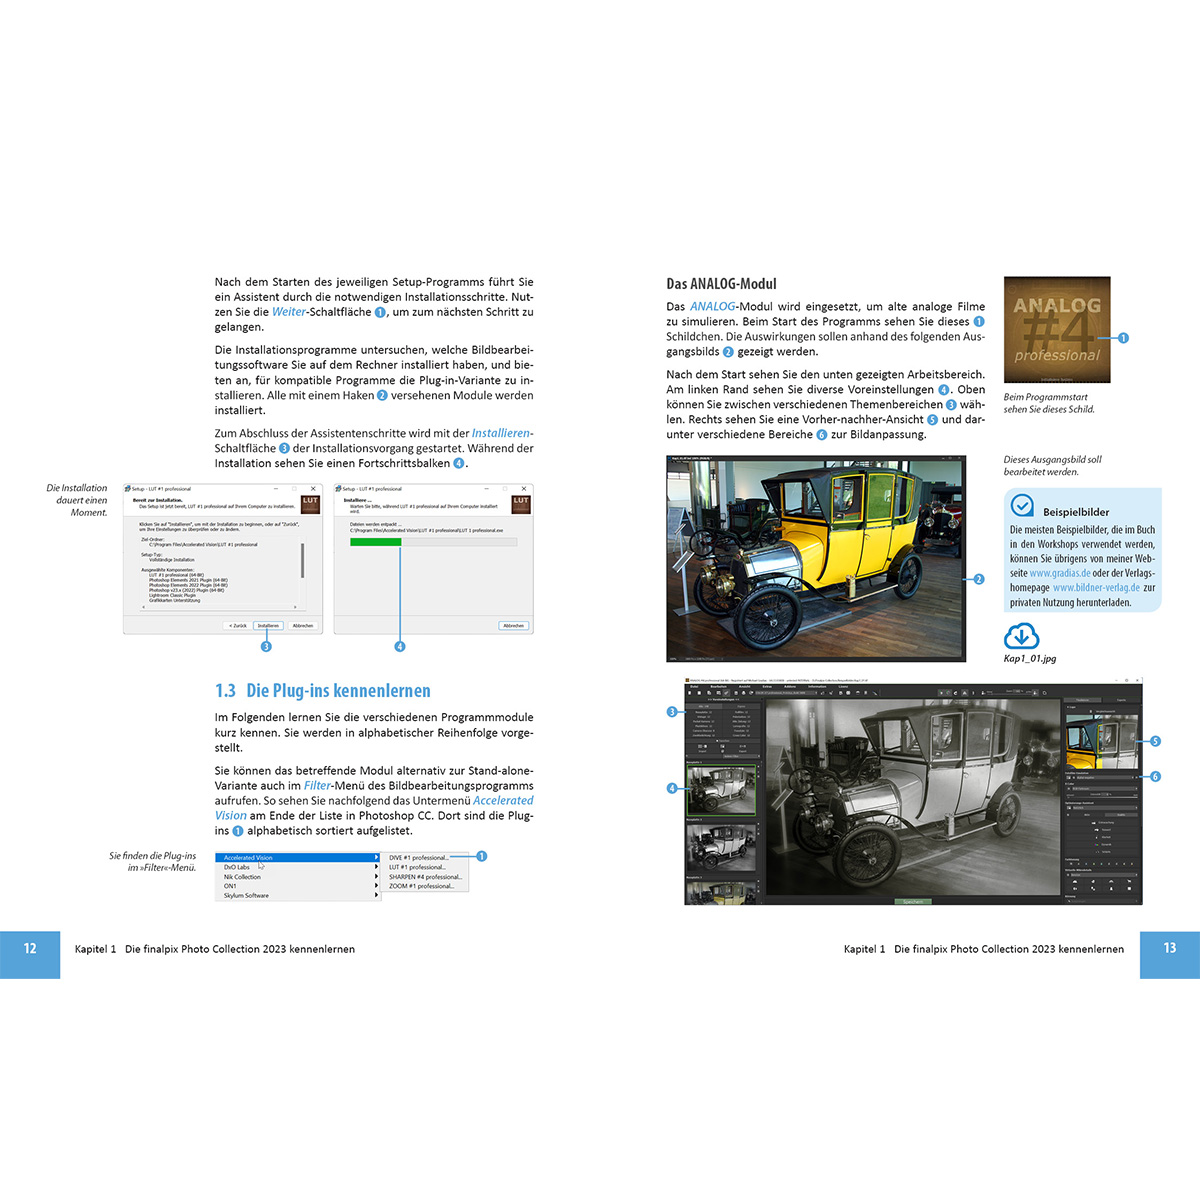 finalpix Das 2023 - Praxisbuch Bildbearbeitungstools zu smarten 7 den Photo Collection umfassende